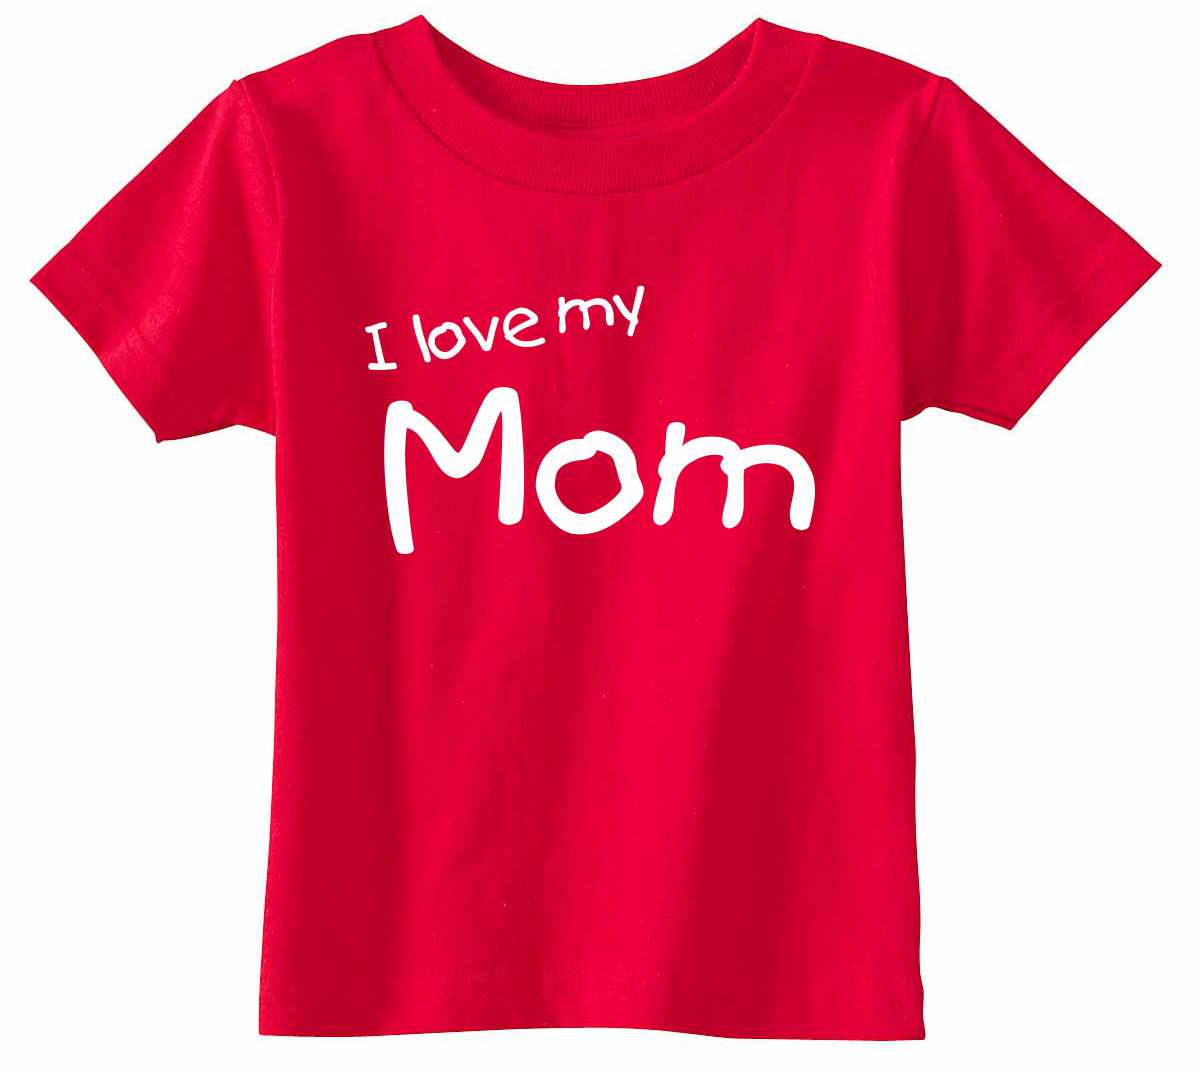 I Love My Mom on Infant-Toddler T-Shirt (#1316-7)